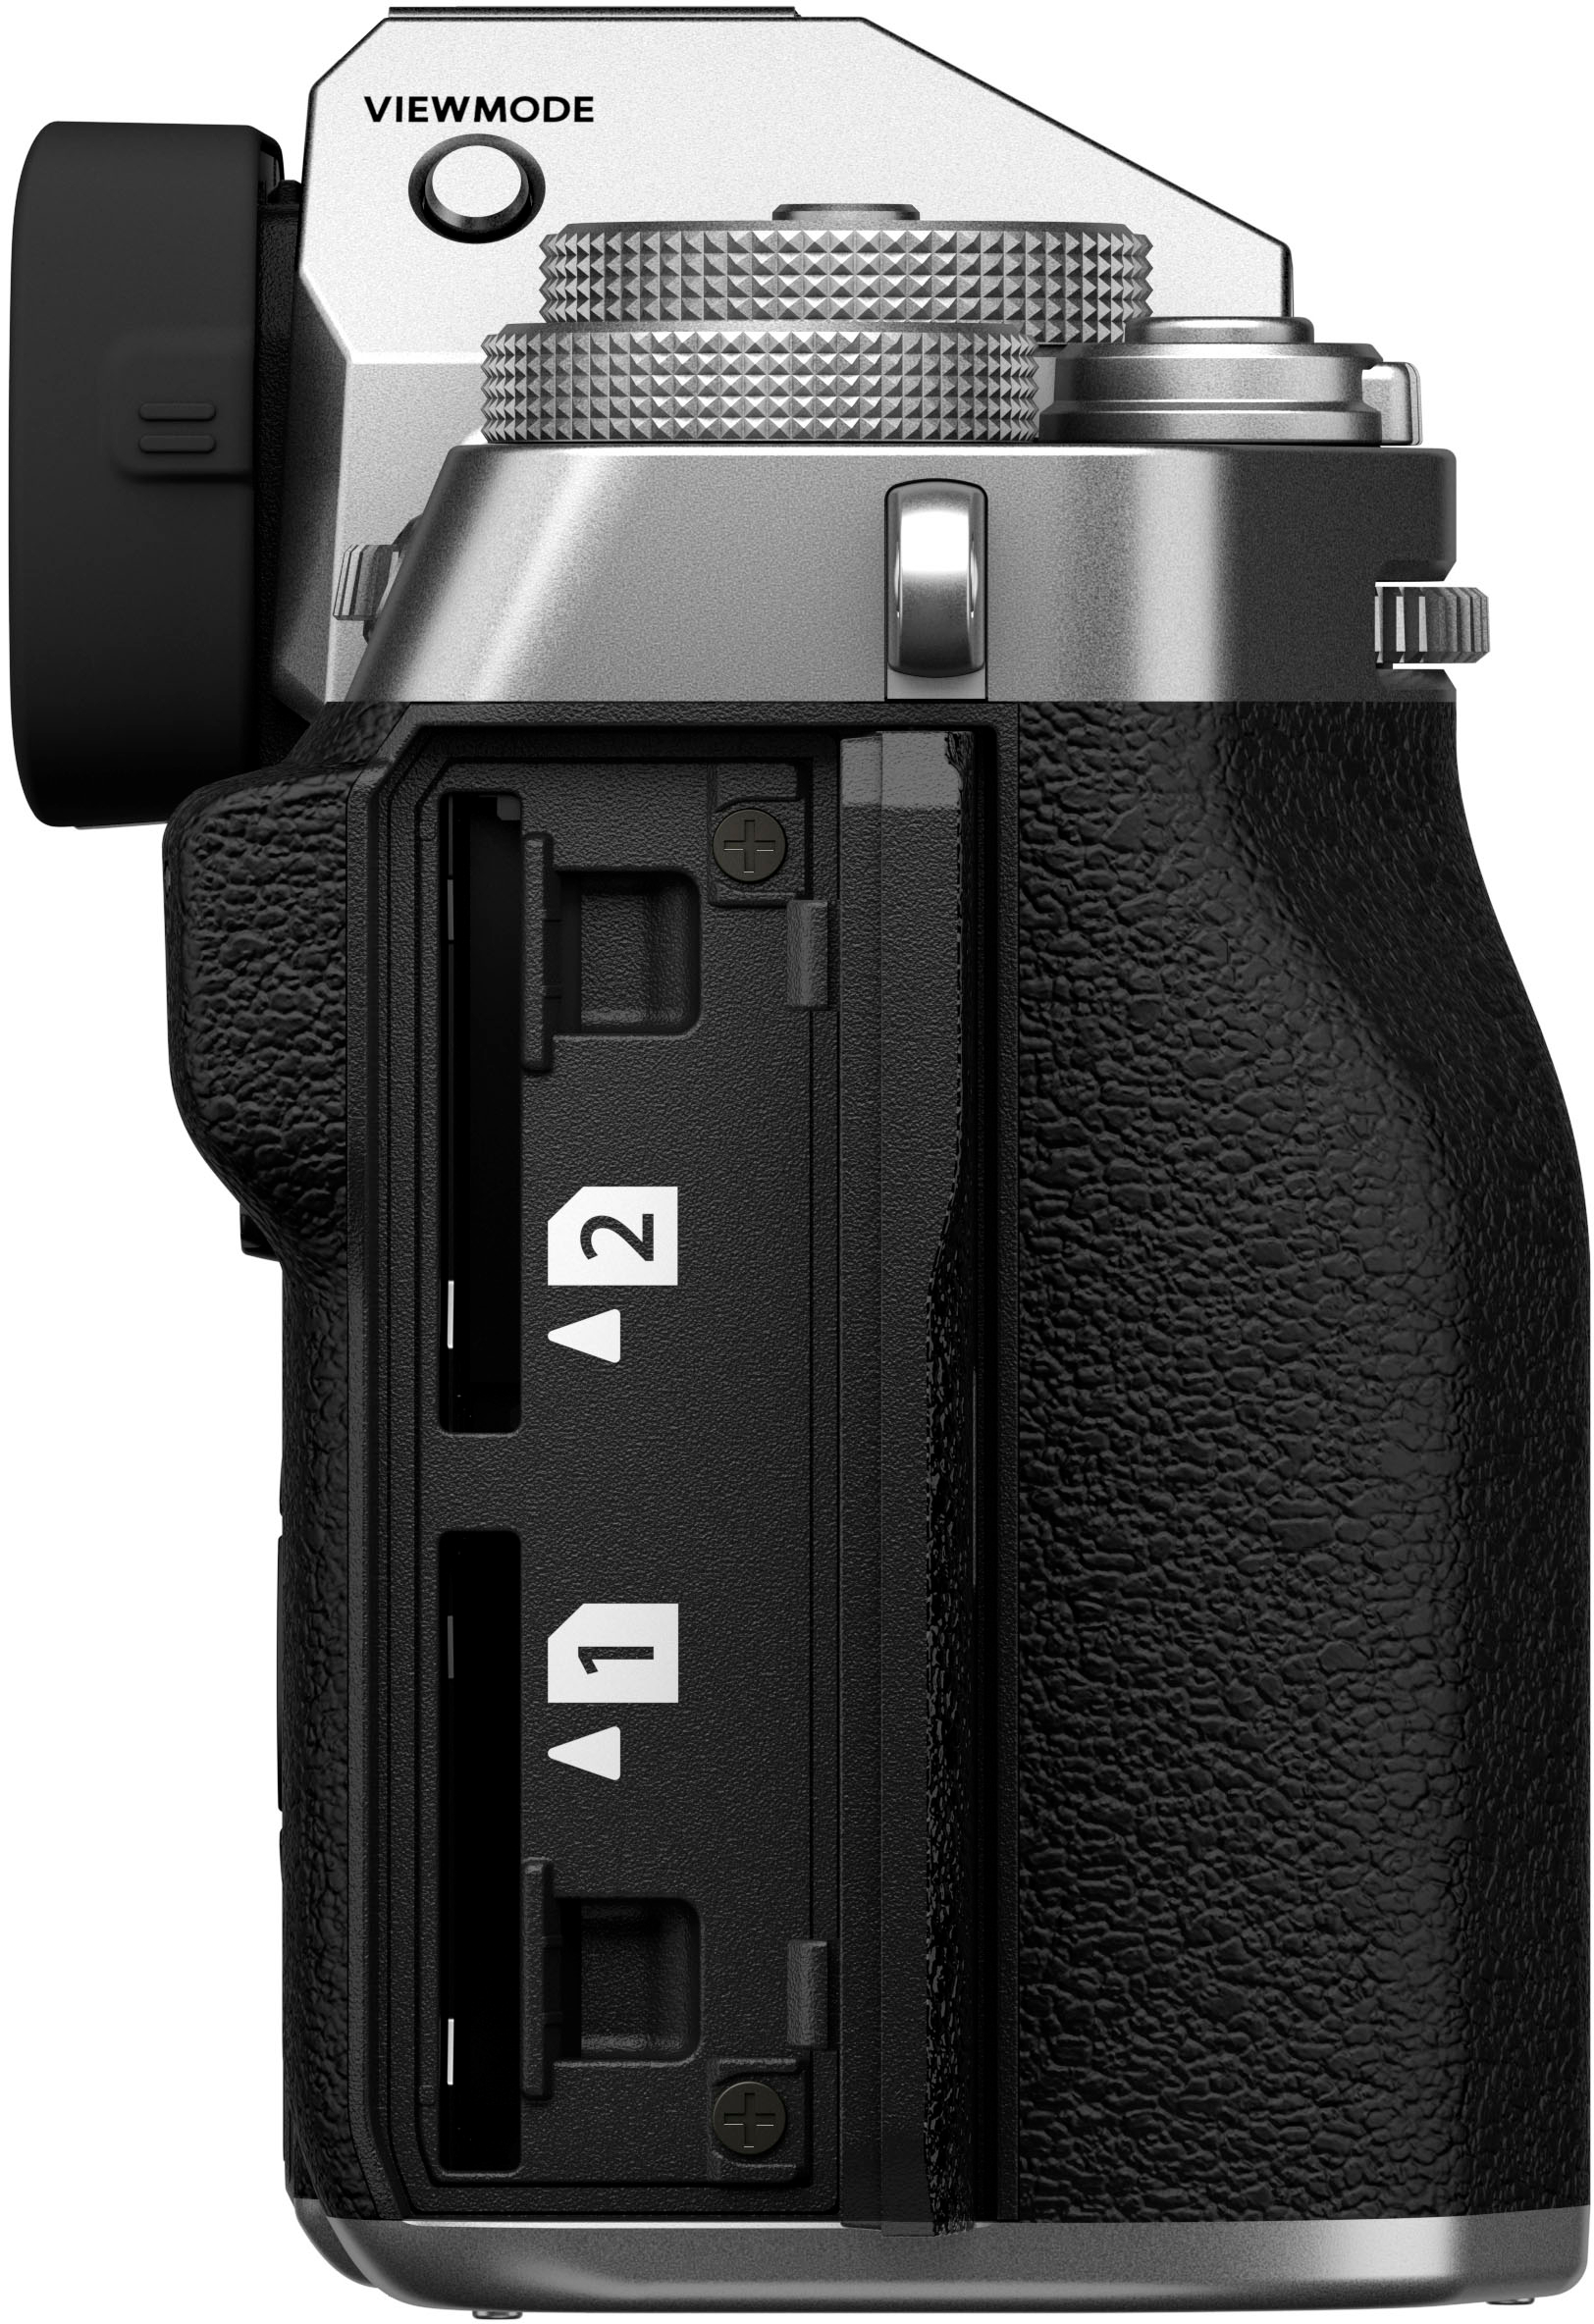 Fujifilm X-T5 Mirrorless Camera with XF16-80mmF4 R OIS WR Lens Bundle  Silver 16782662 - Best Buy